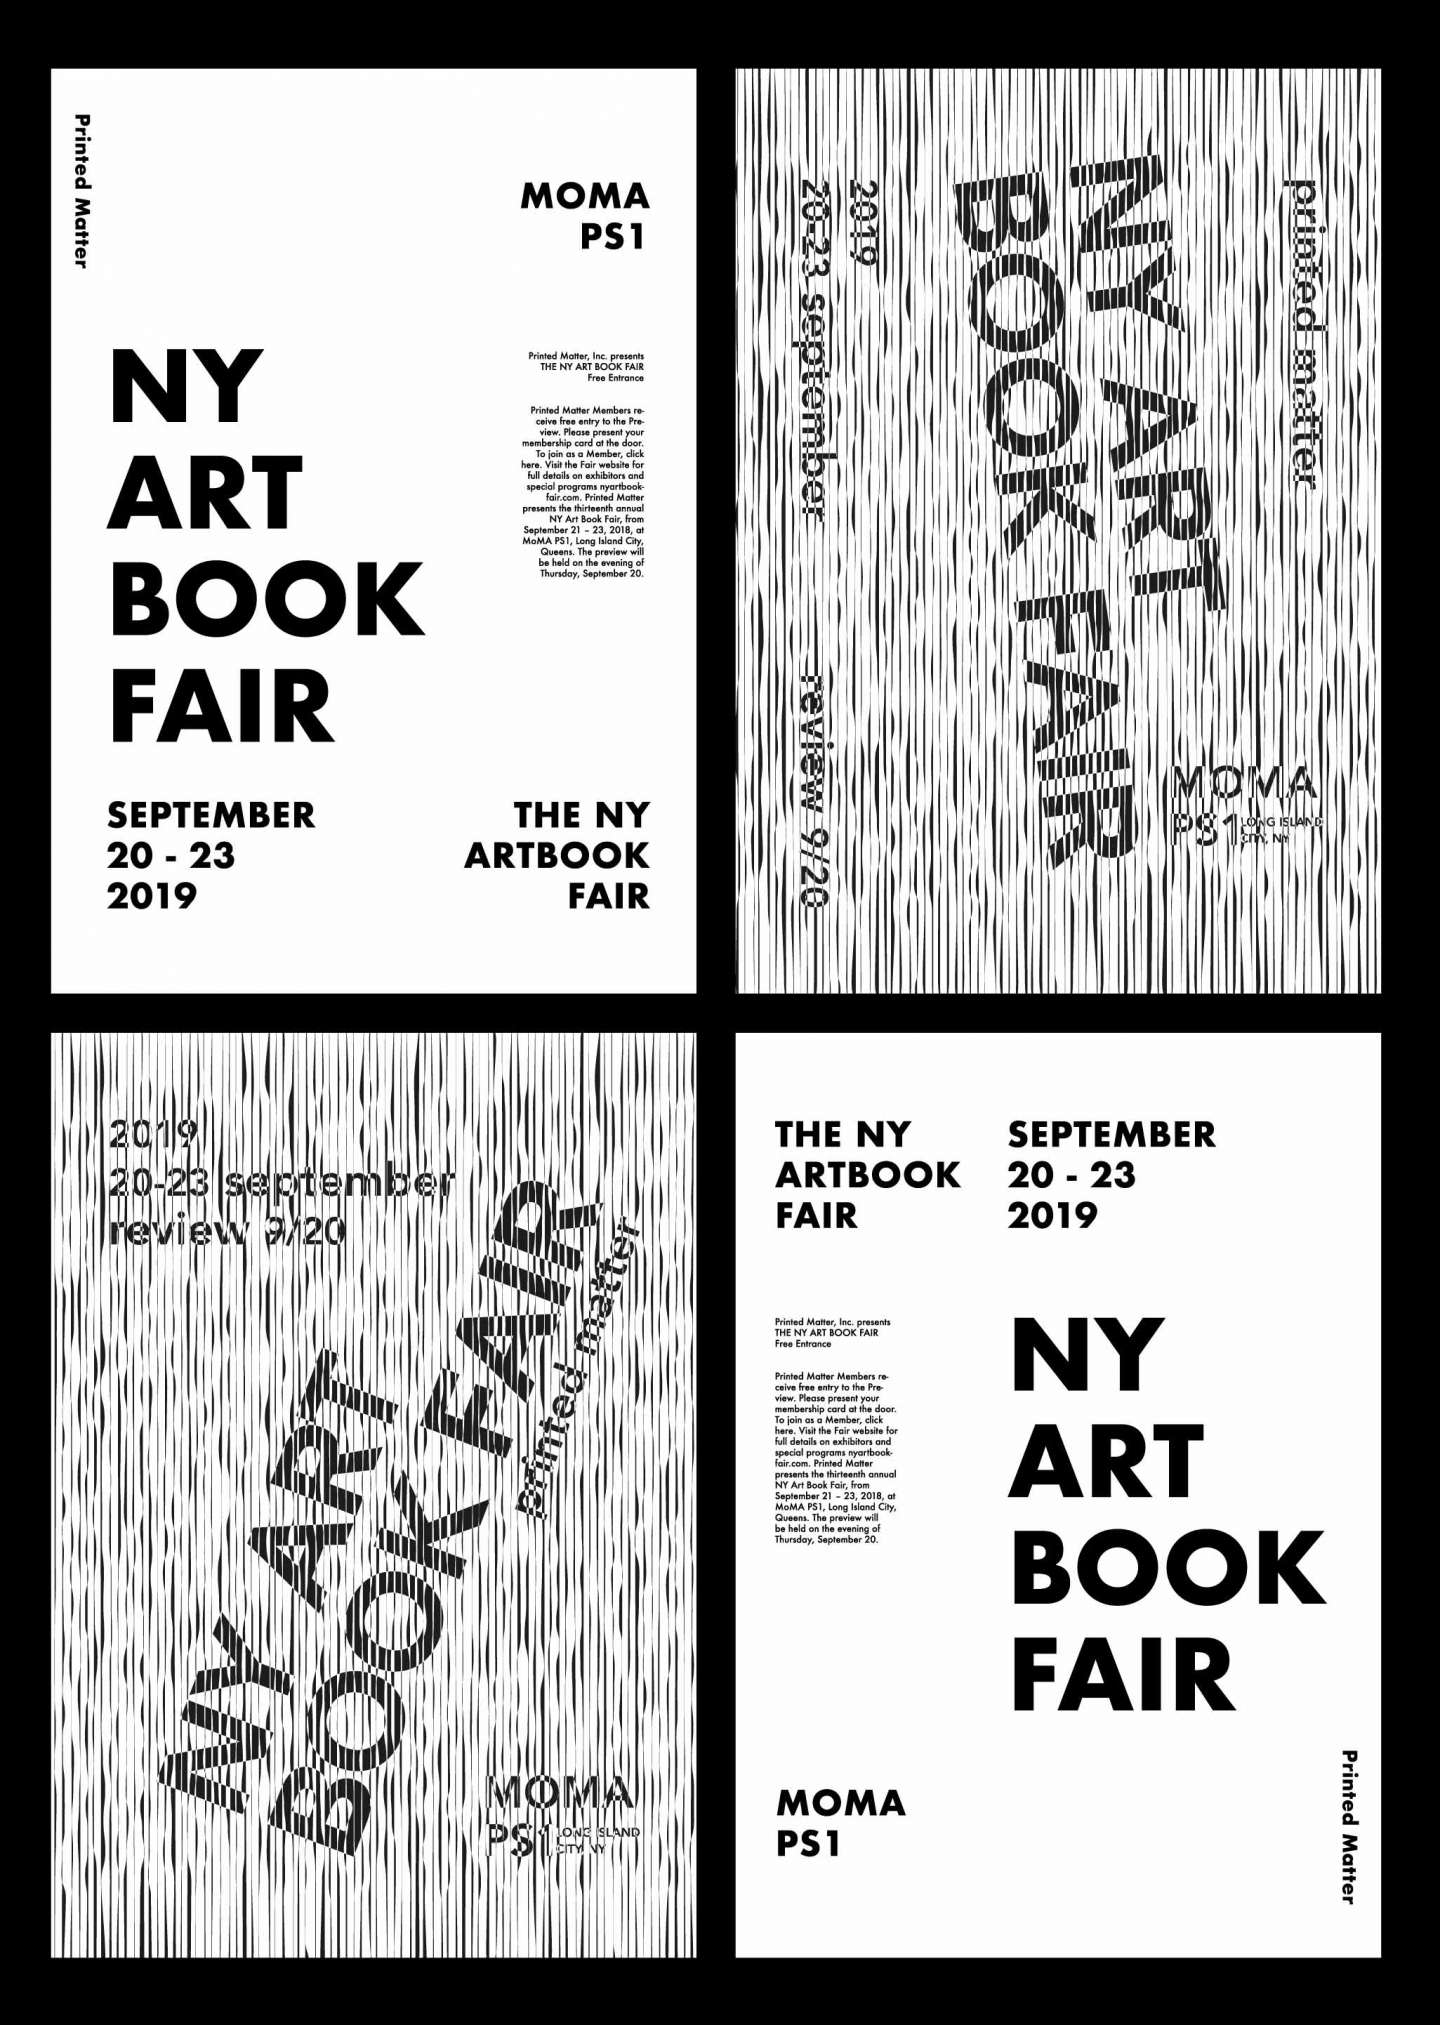 NY Art Book Fair Poster